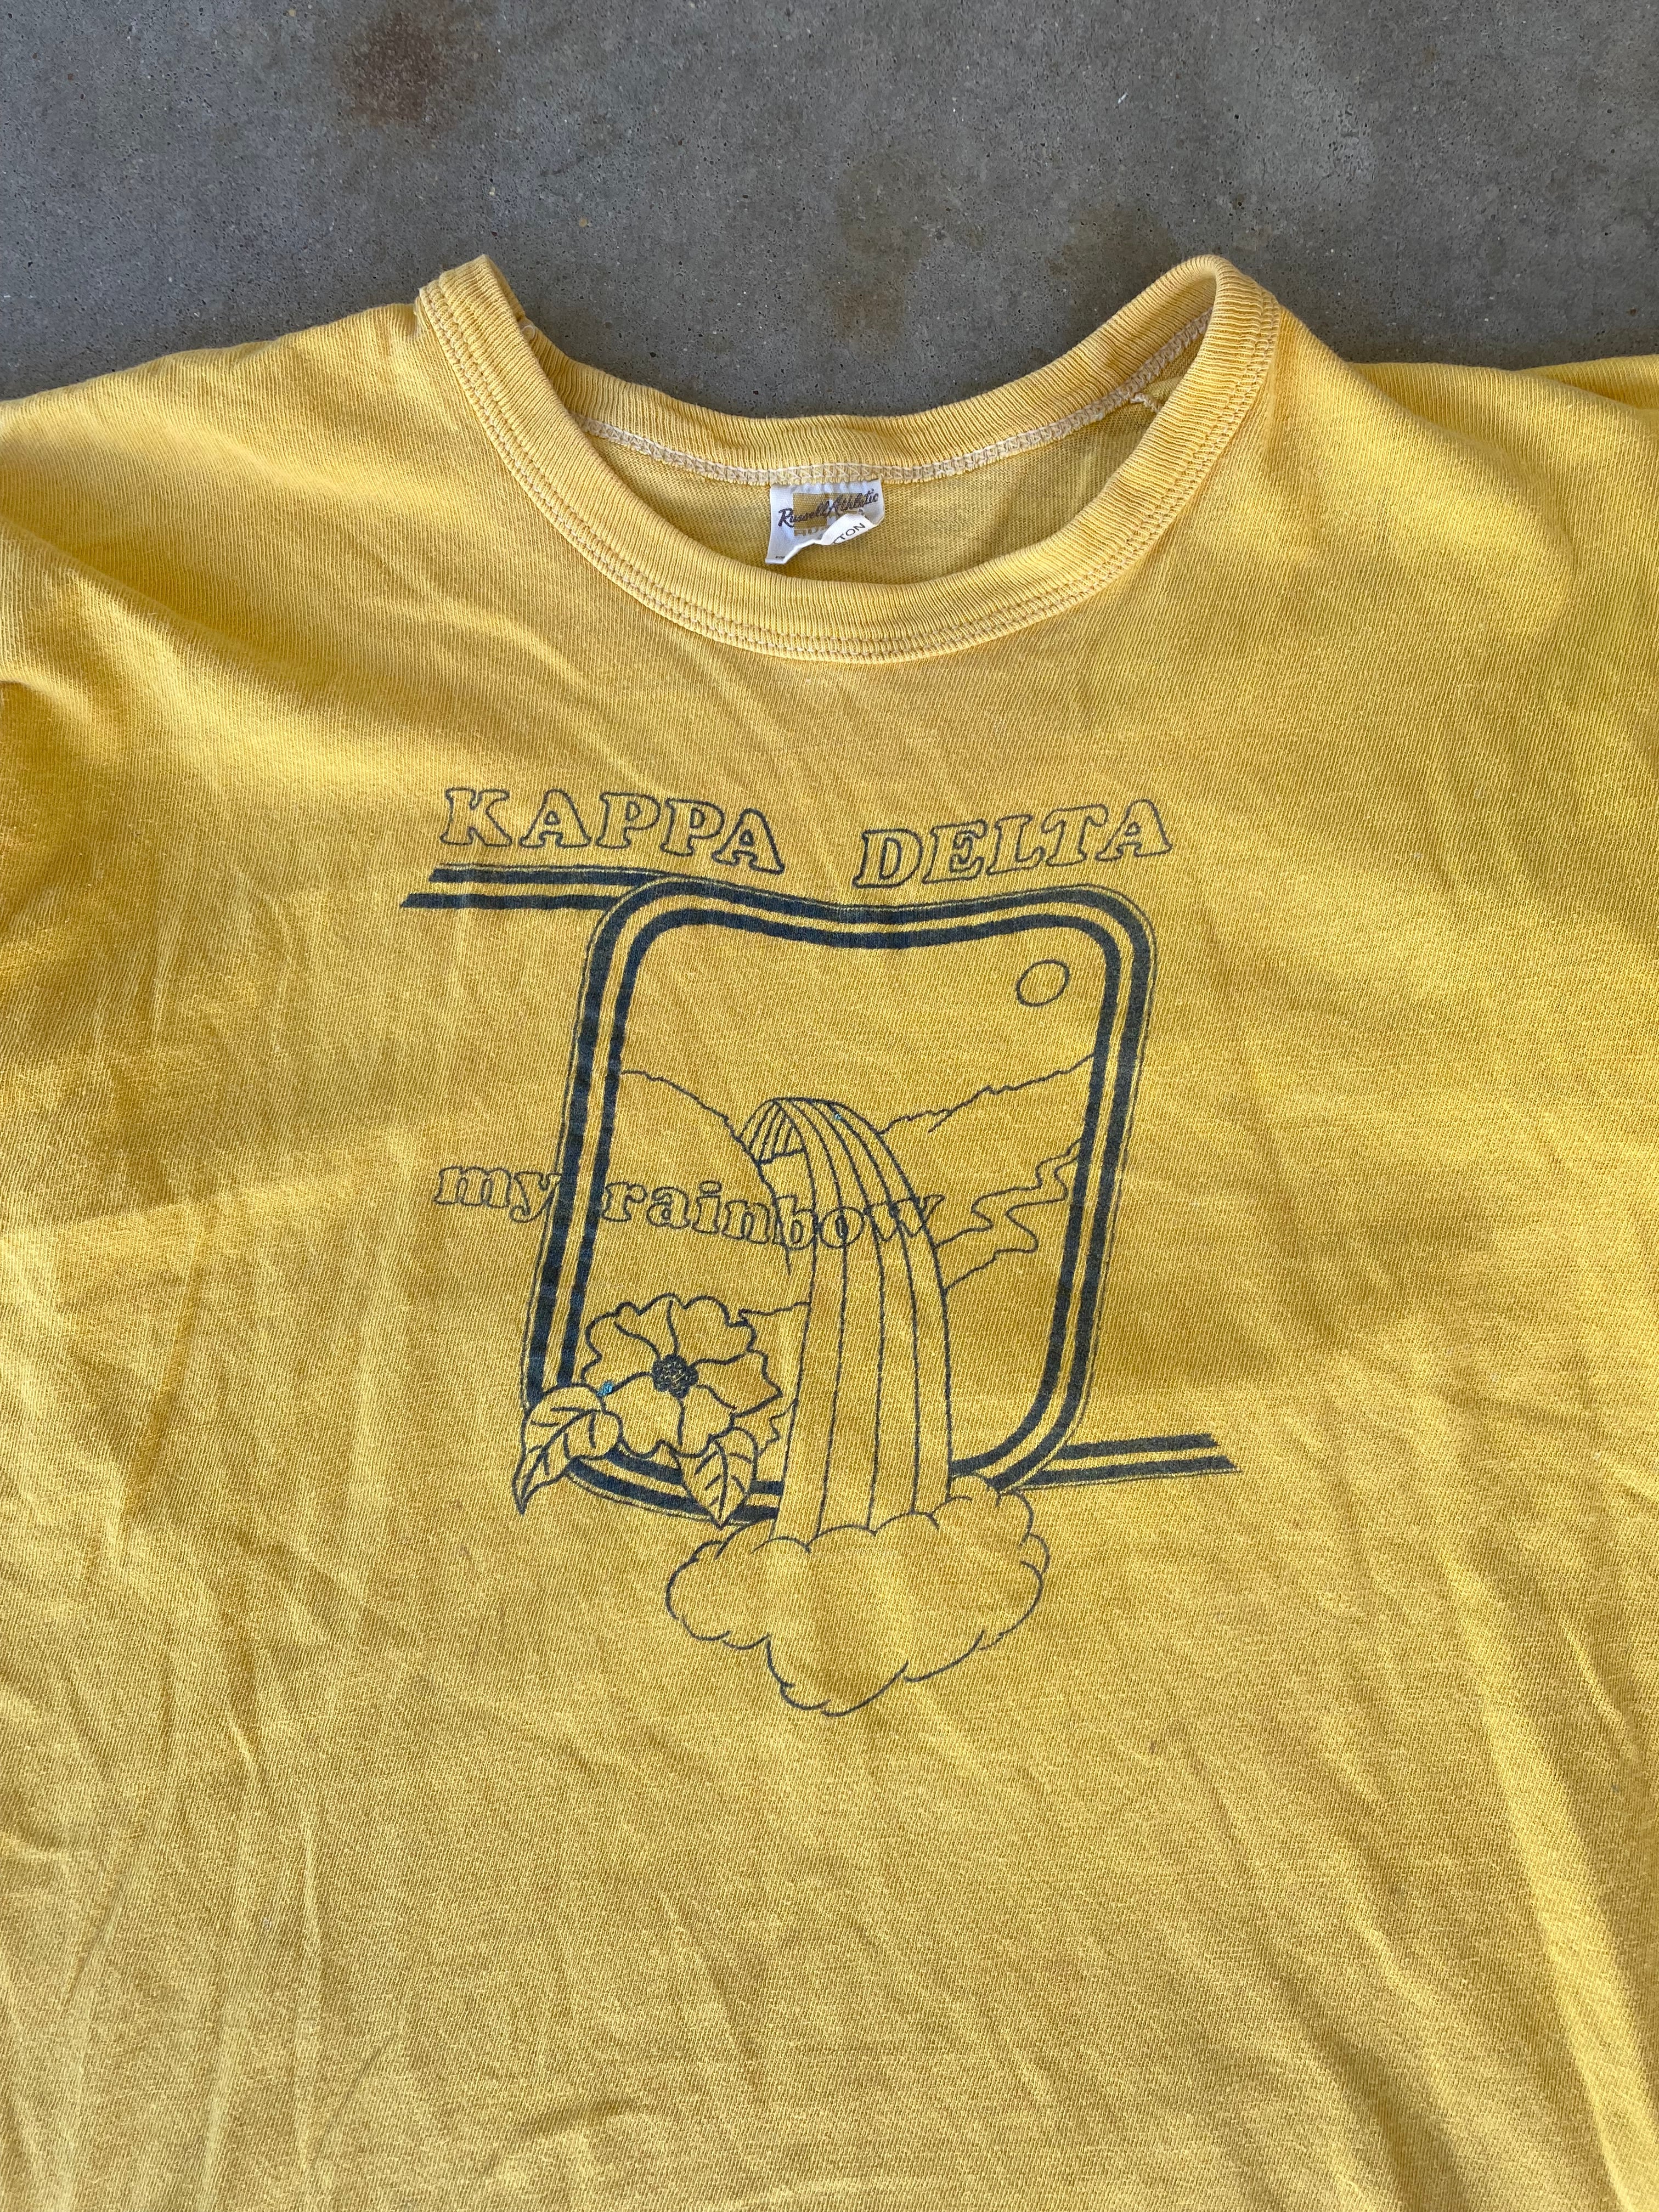 1980s Kappa Delta "My Rainbow" T-Shirt (M)